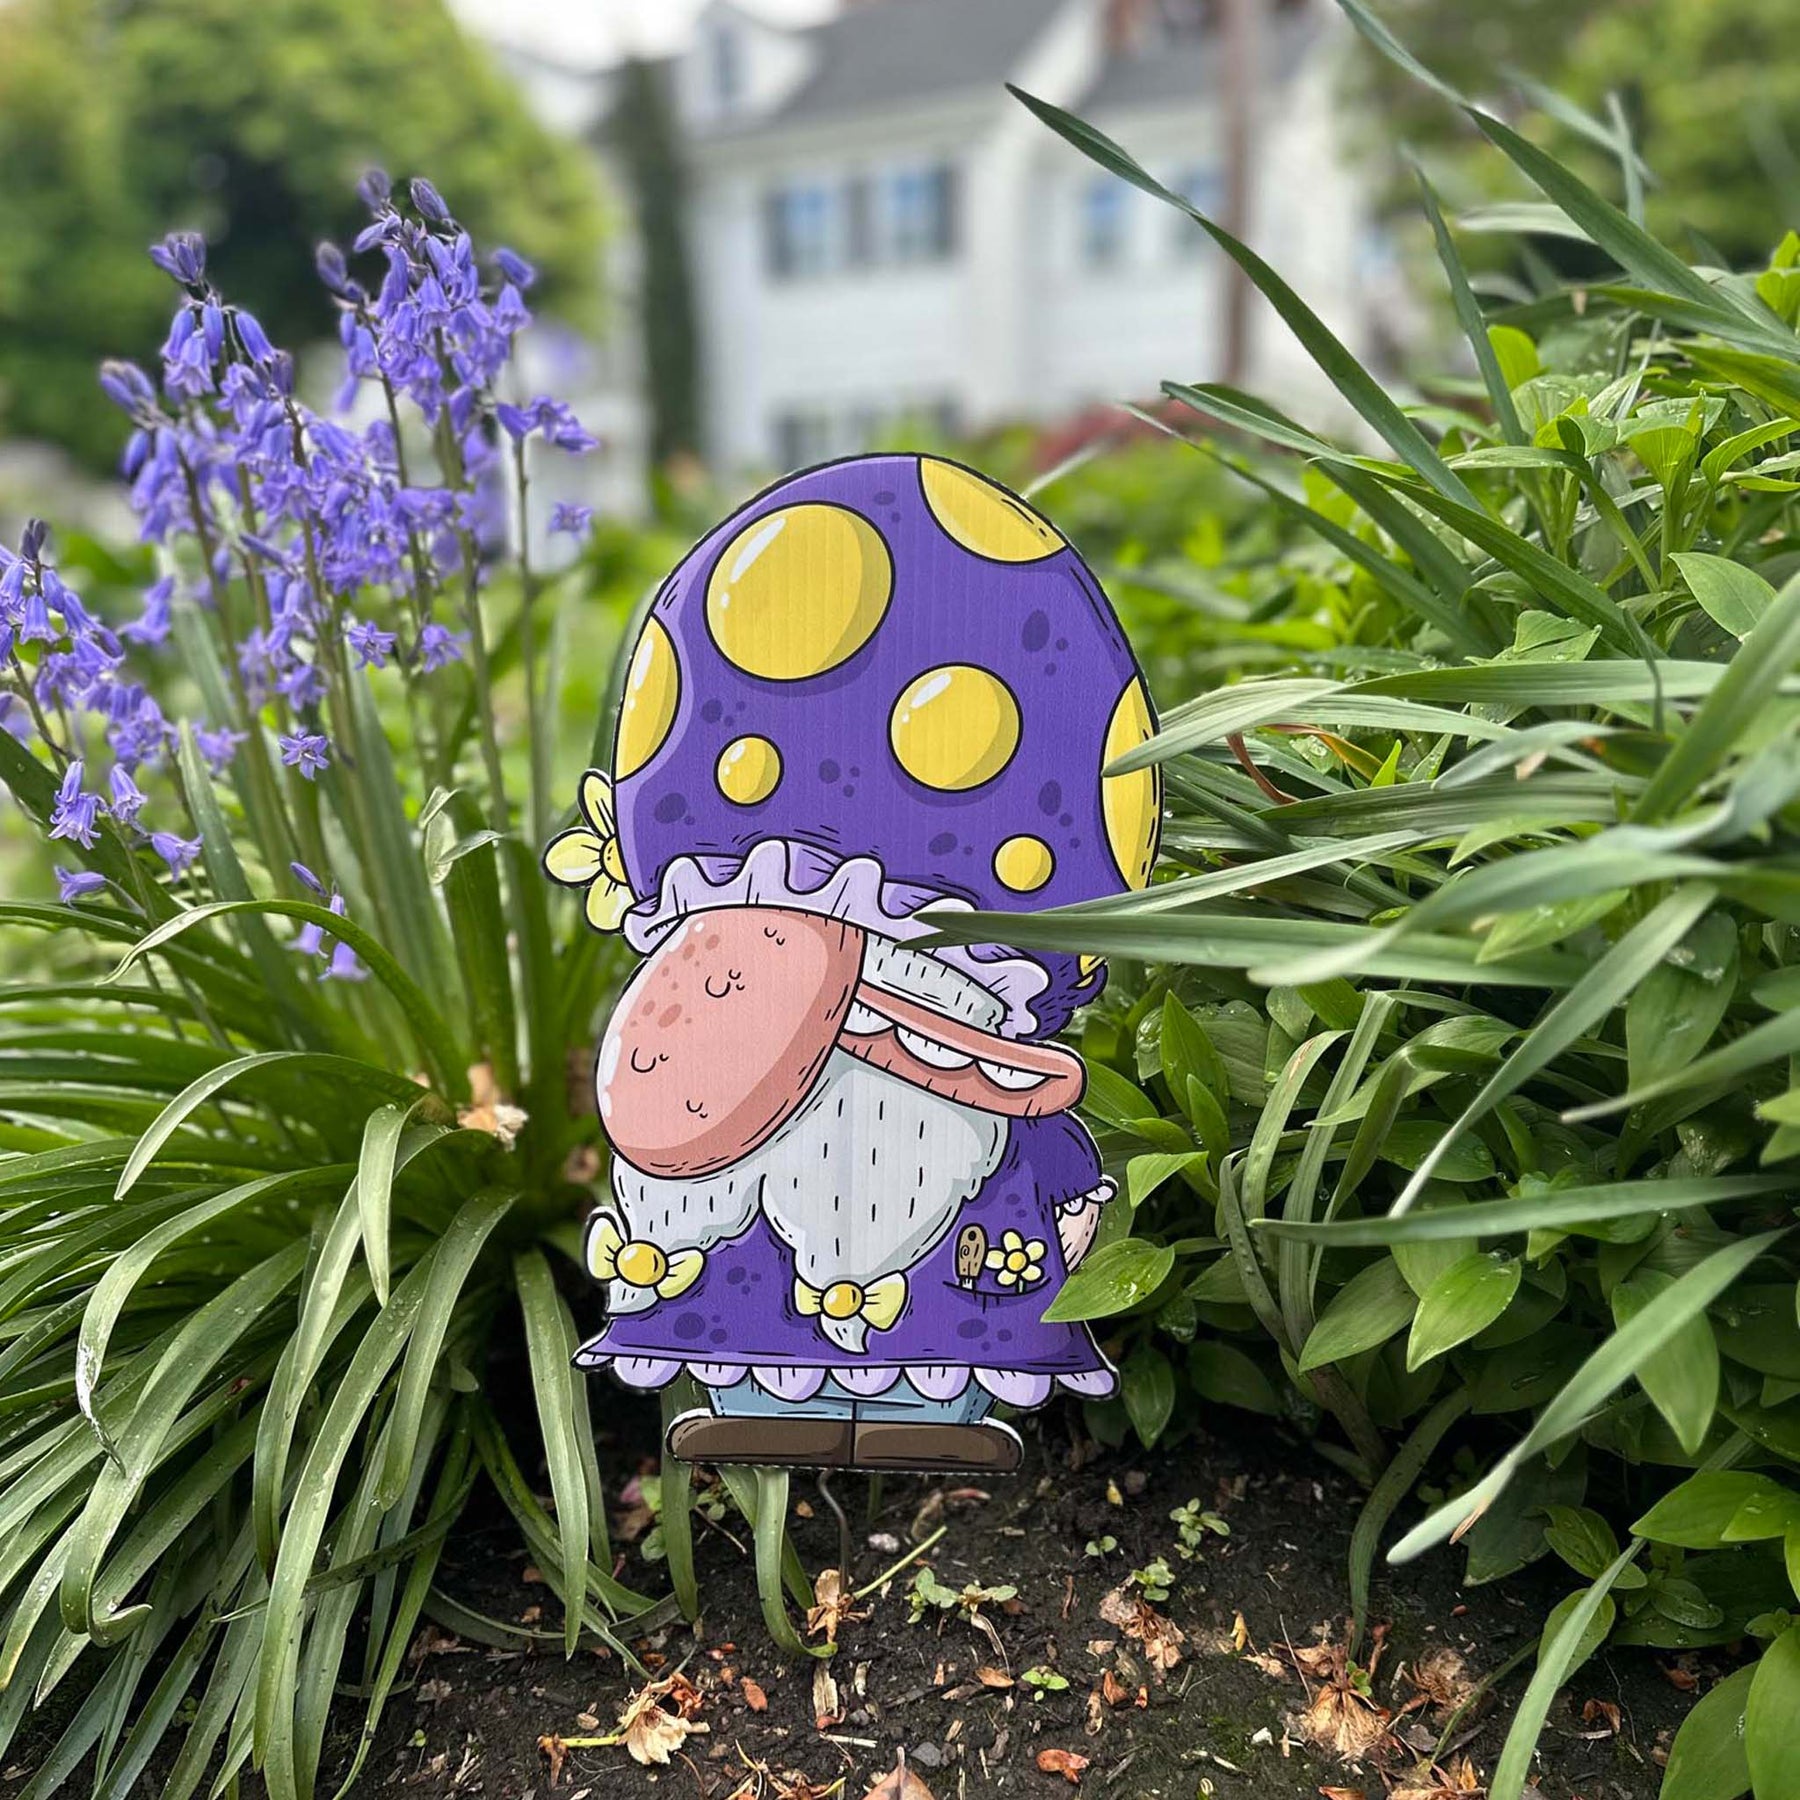 Gnatalie the Gnome | Yard Decoration